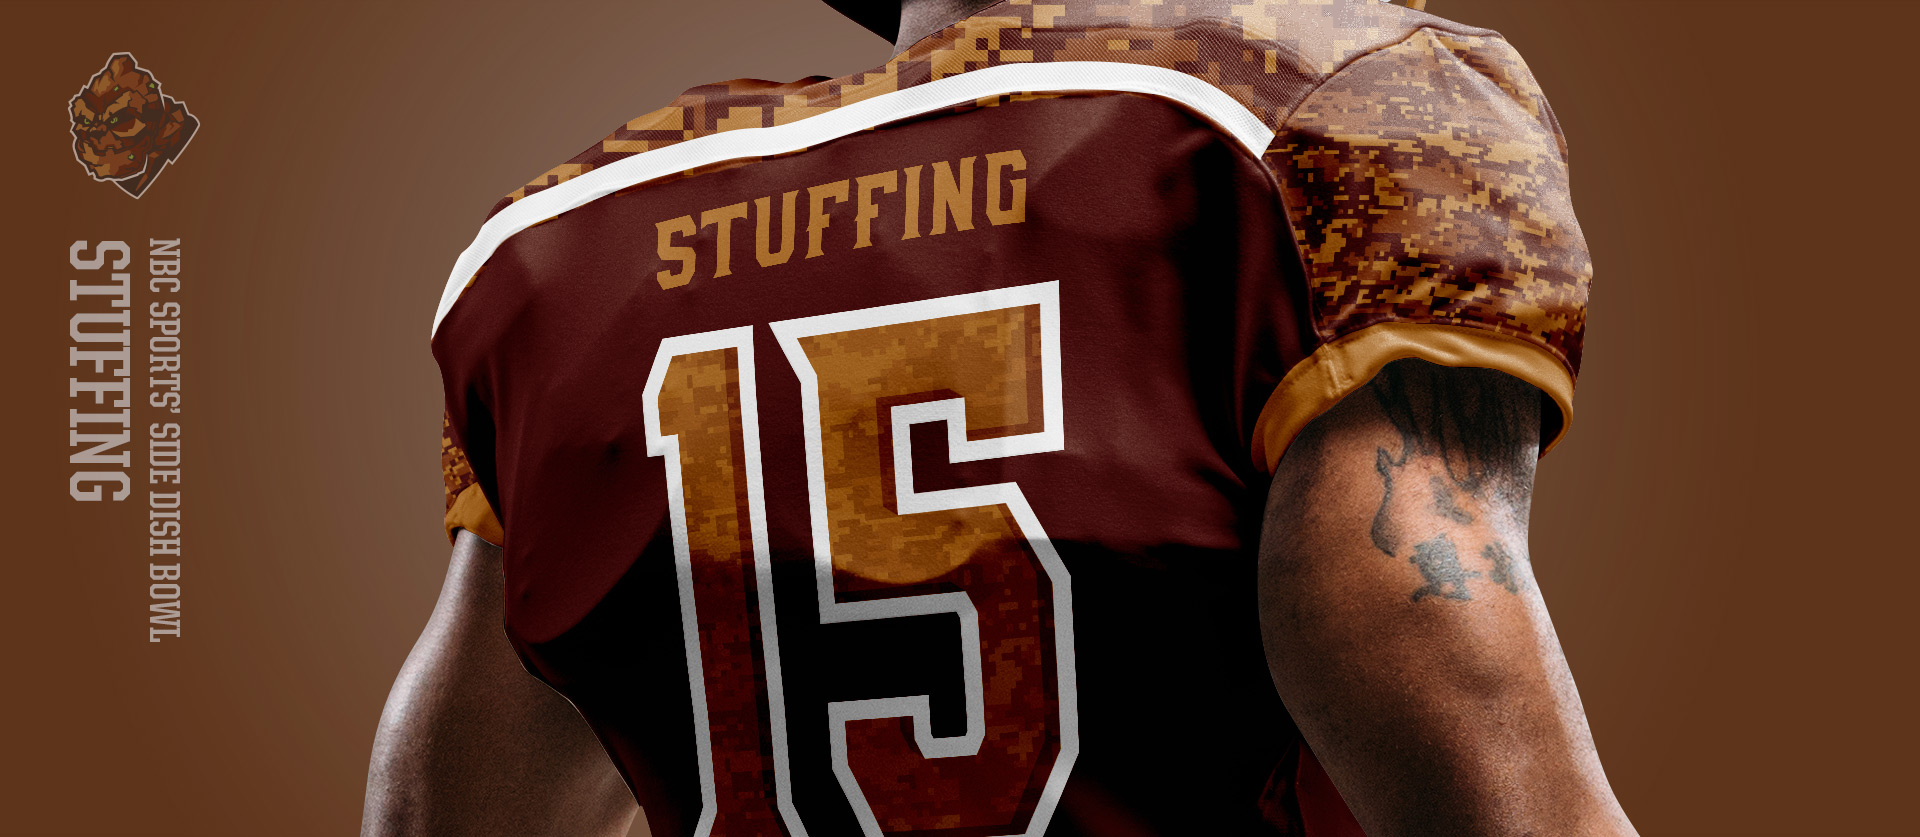 Stuffing Back - Football Uniform Design for NBC Sports Thanksgiving Side Dish Bowl